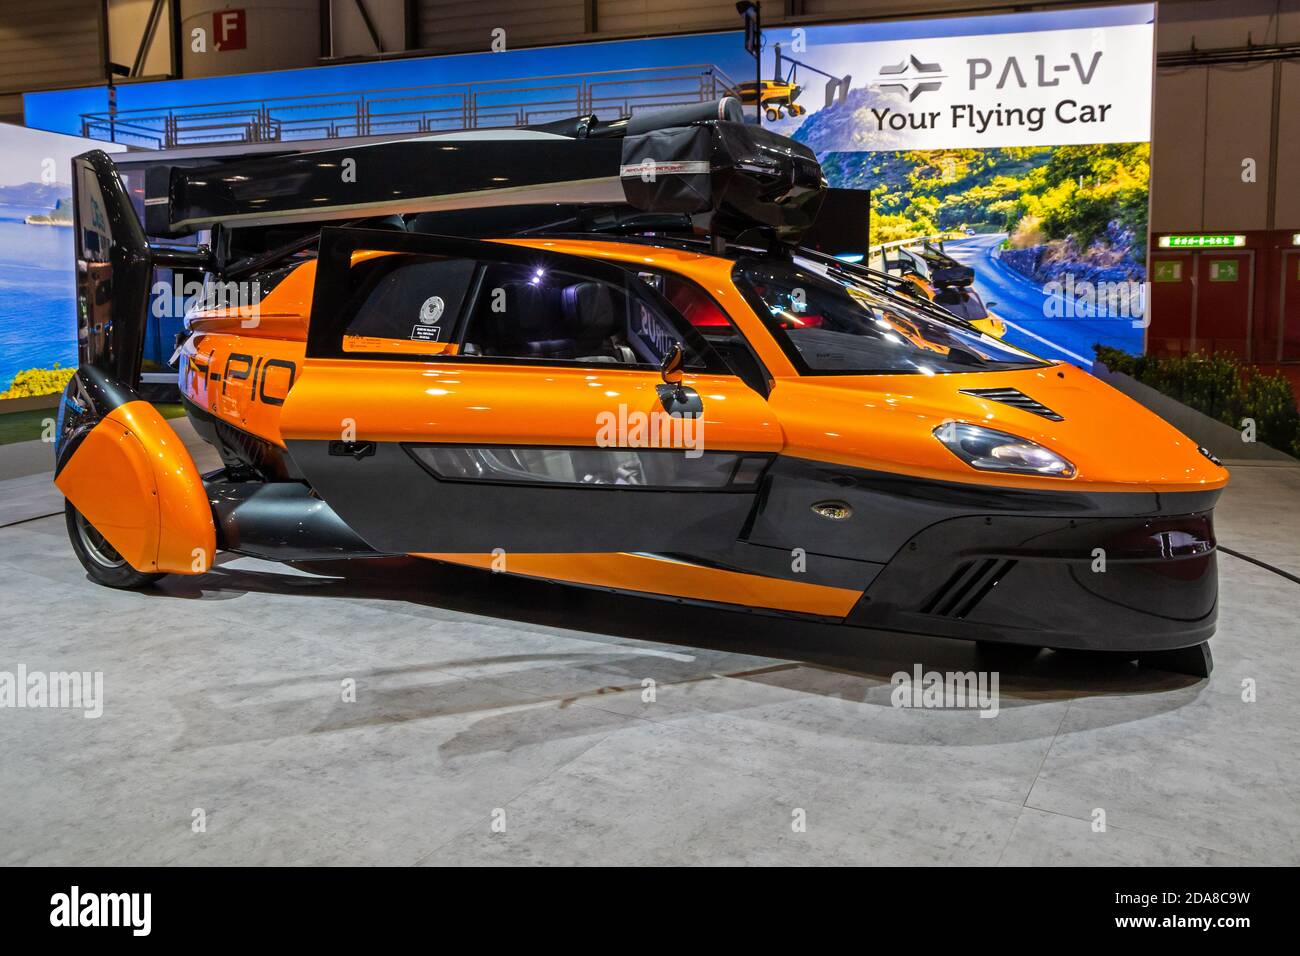 PAL-V Liberty flying car showcased at the 89th Geneva International Motor Show. Geneva, Switzerland - March 6, 2019. Stock Photo